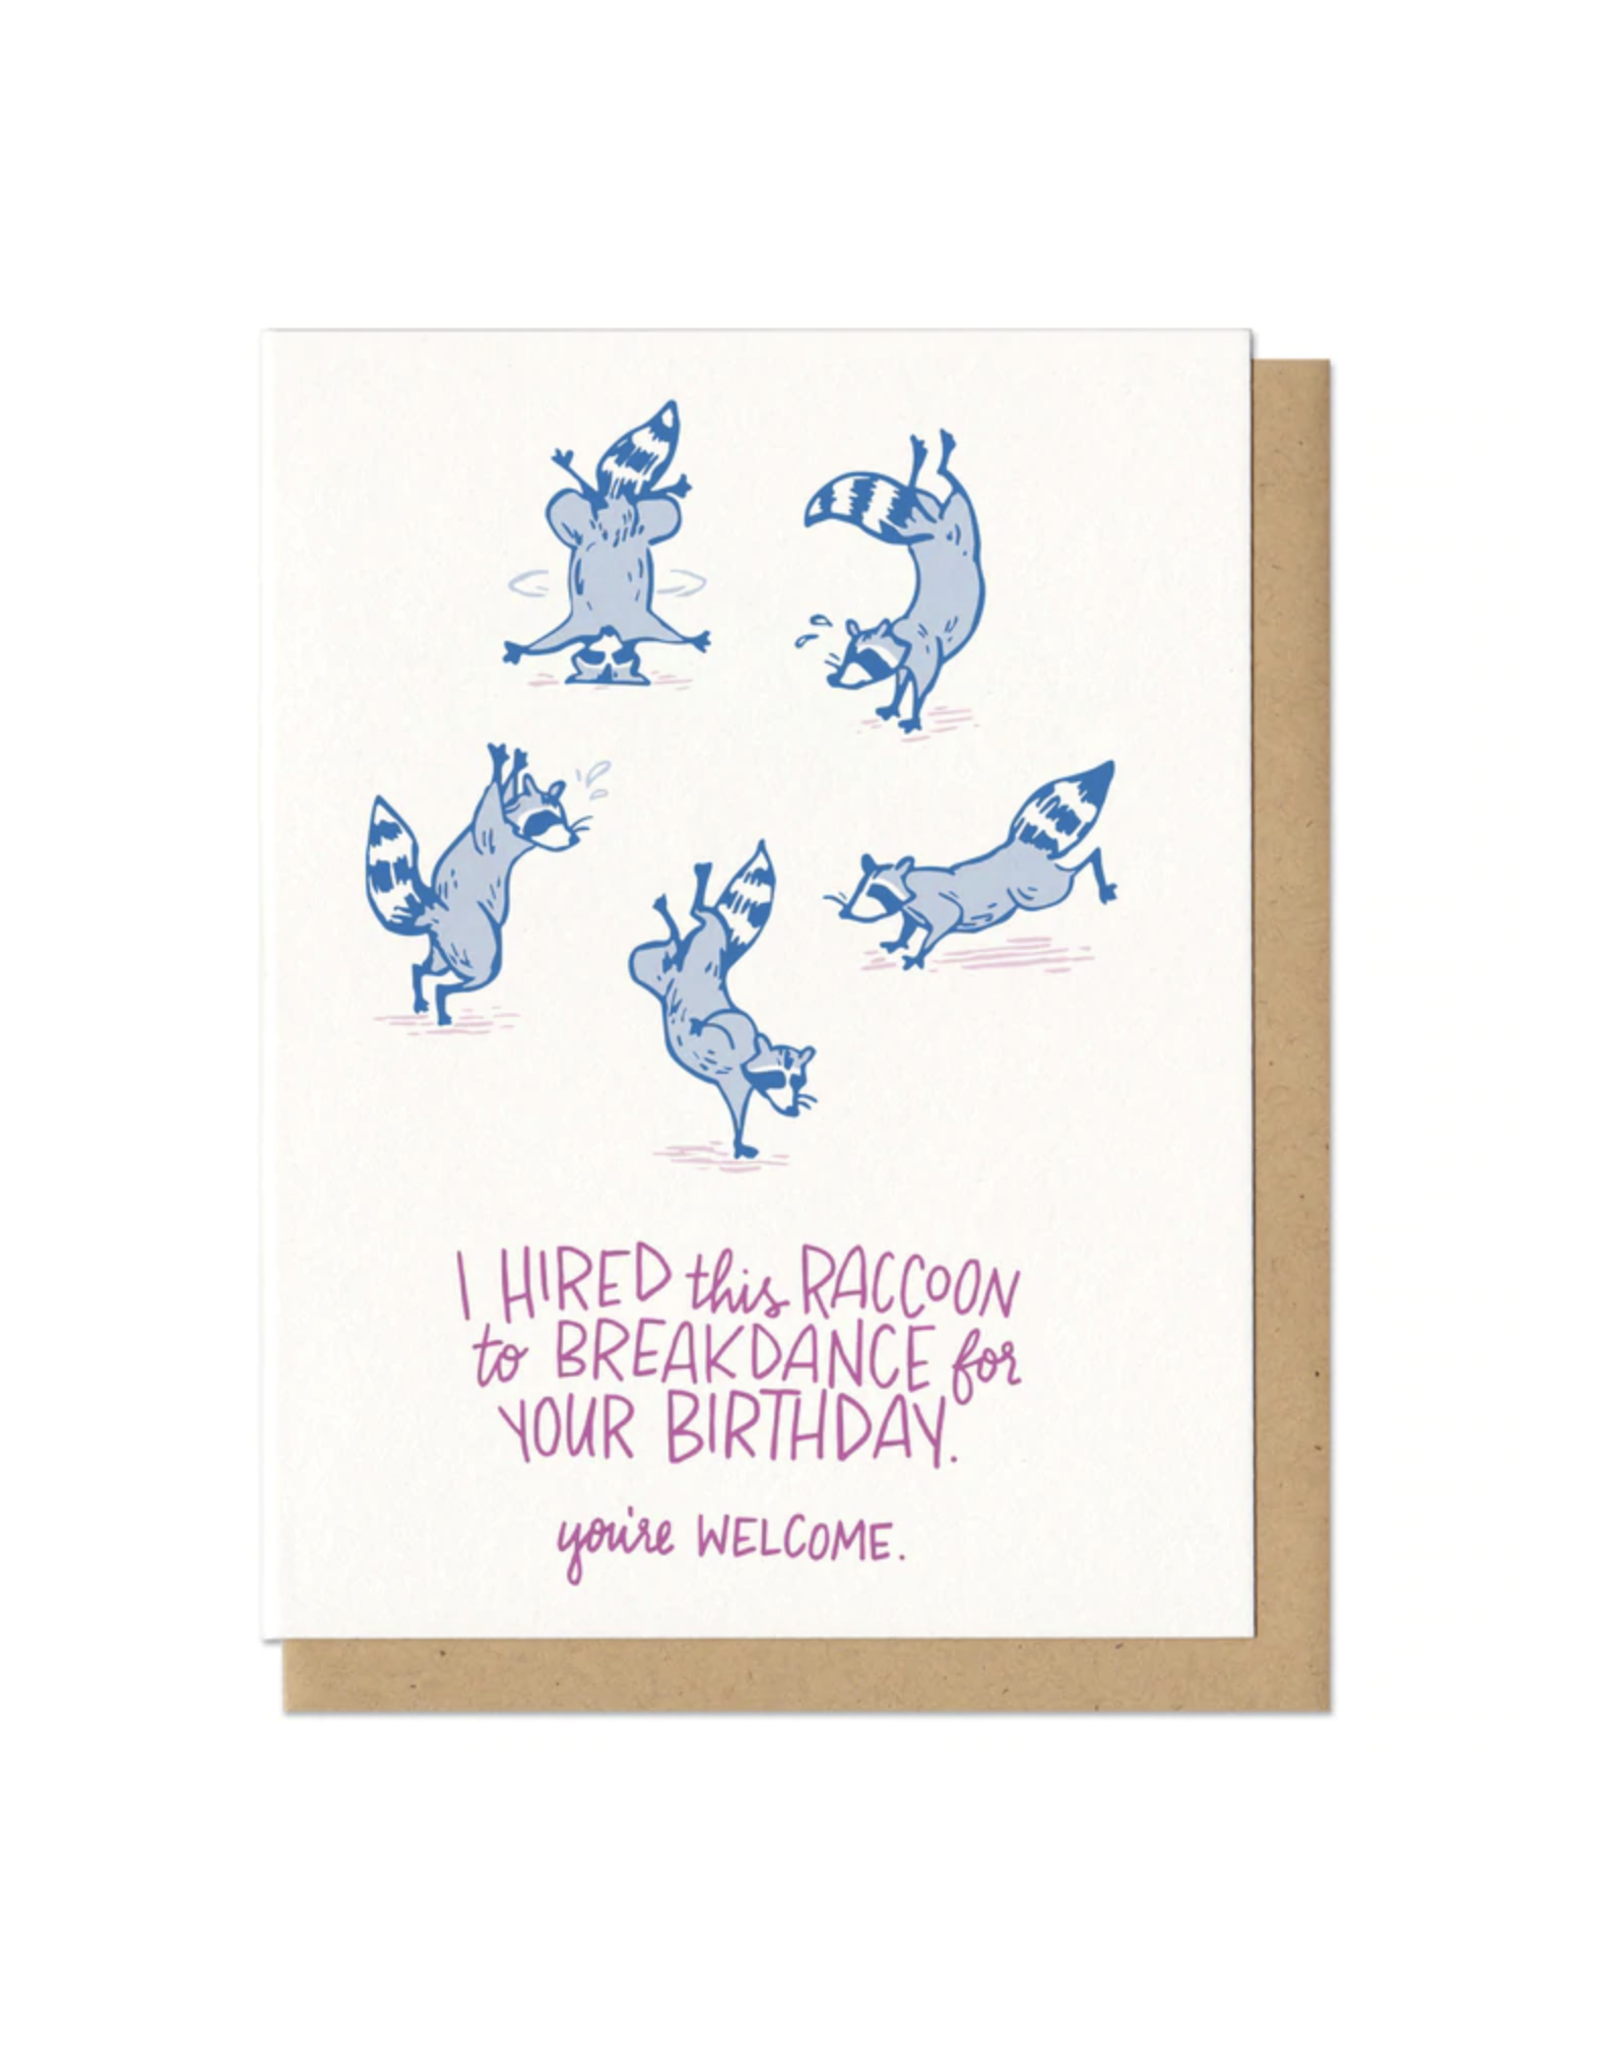 Breakdance Birthday Raccoon (Shaded) Greeting Card